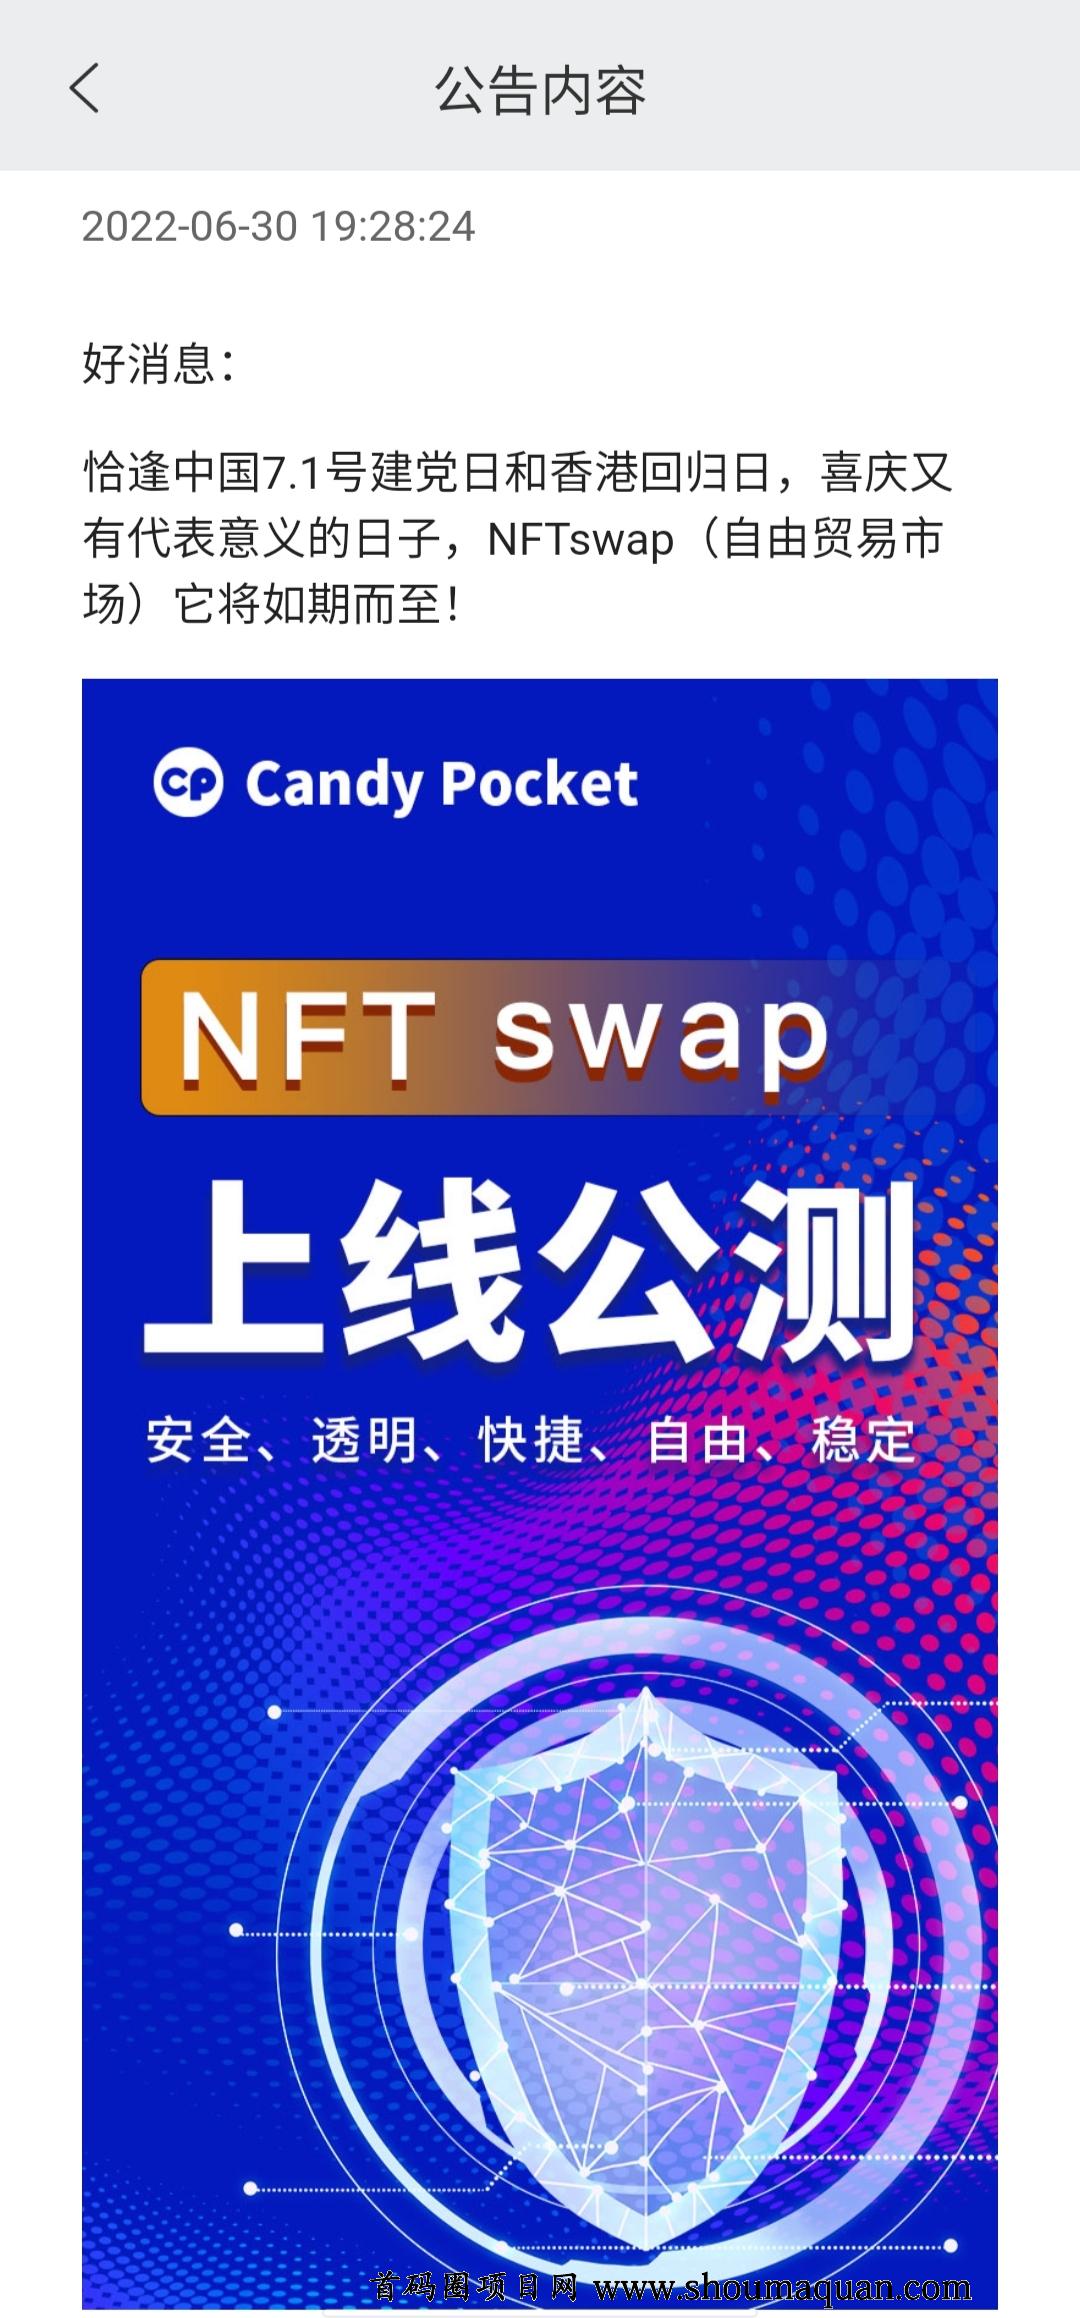 cp糖果口袋2022暴富项目不实铭统一整个项目圈nftswap即将上线自由交易-第1张图片-首码圈